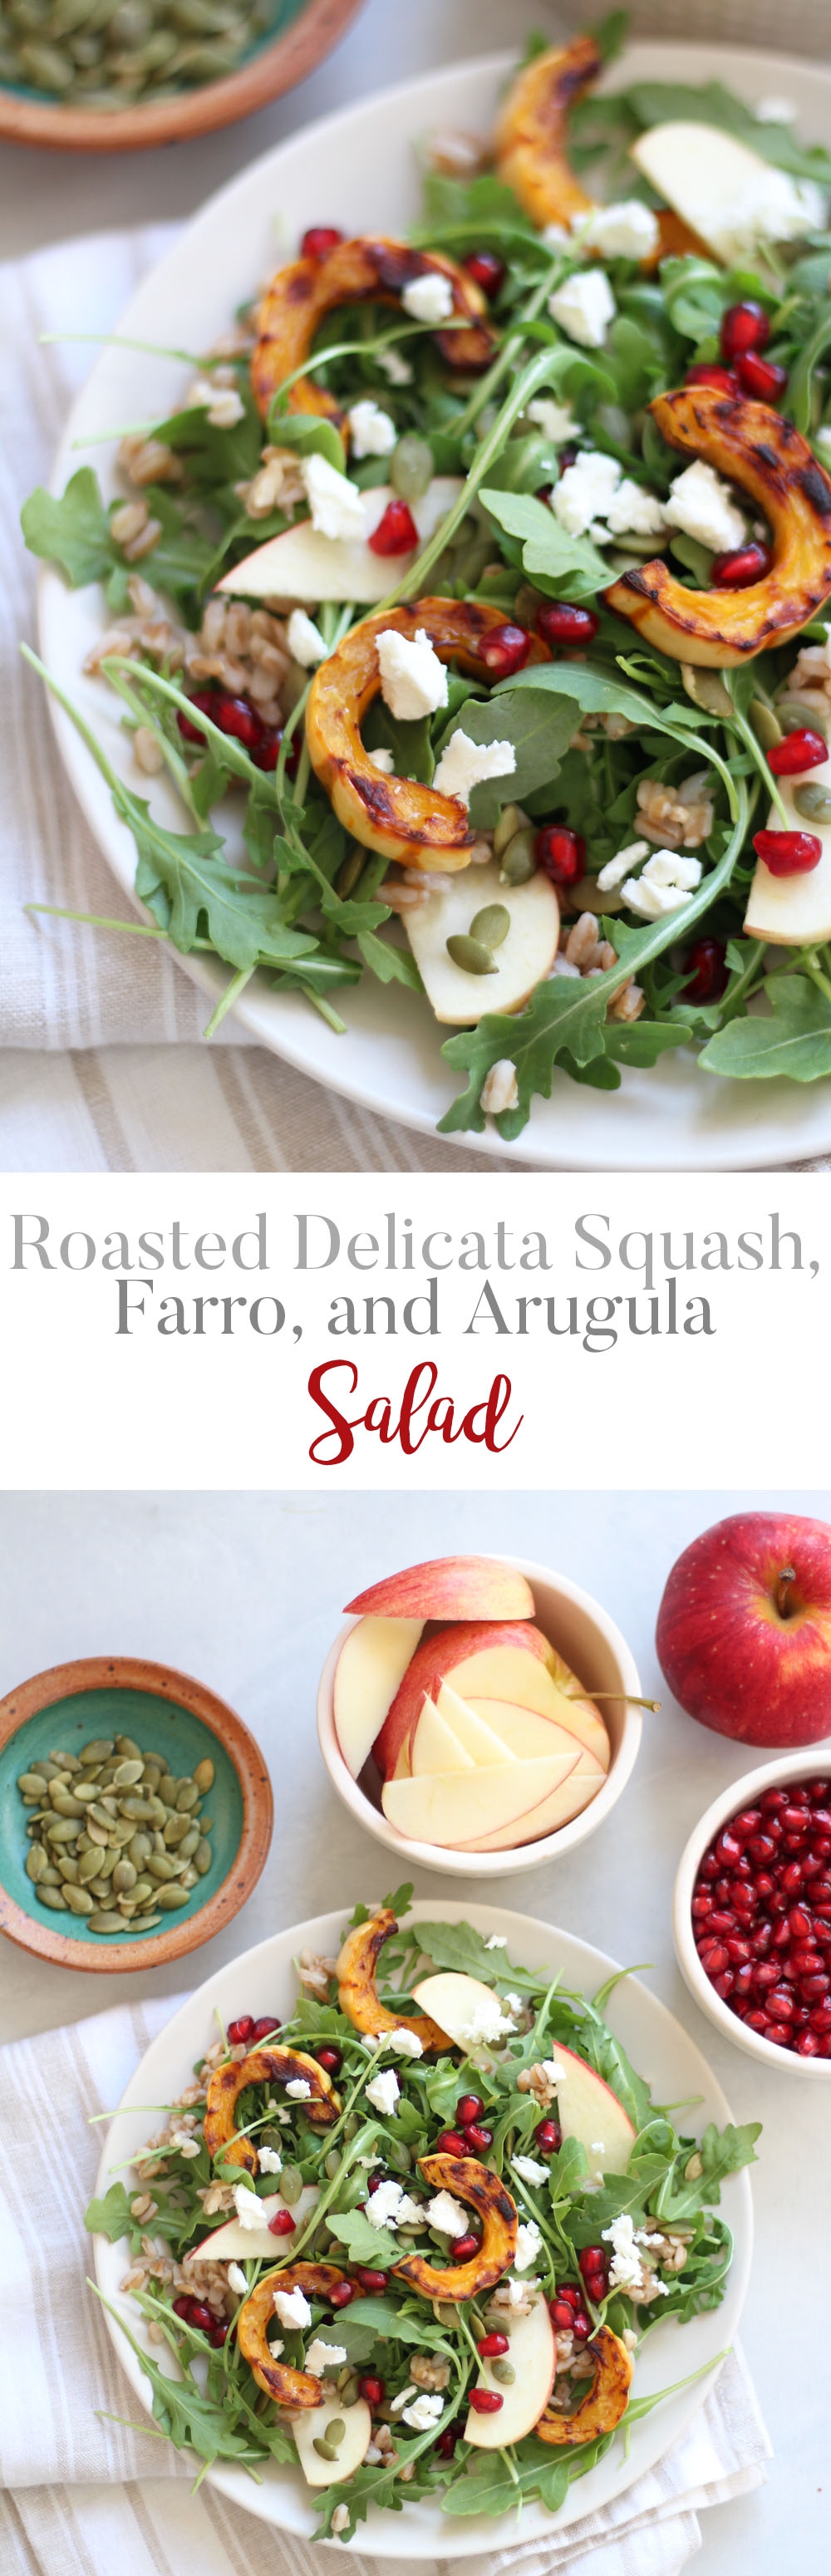 Roasted delicata squash, farro, and arugula salad - the perfect fall and winter salad!